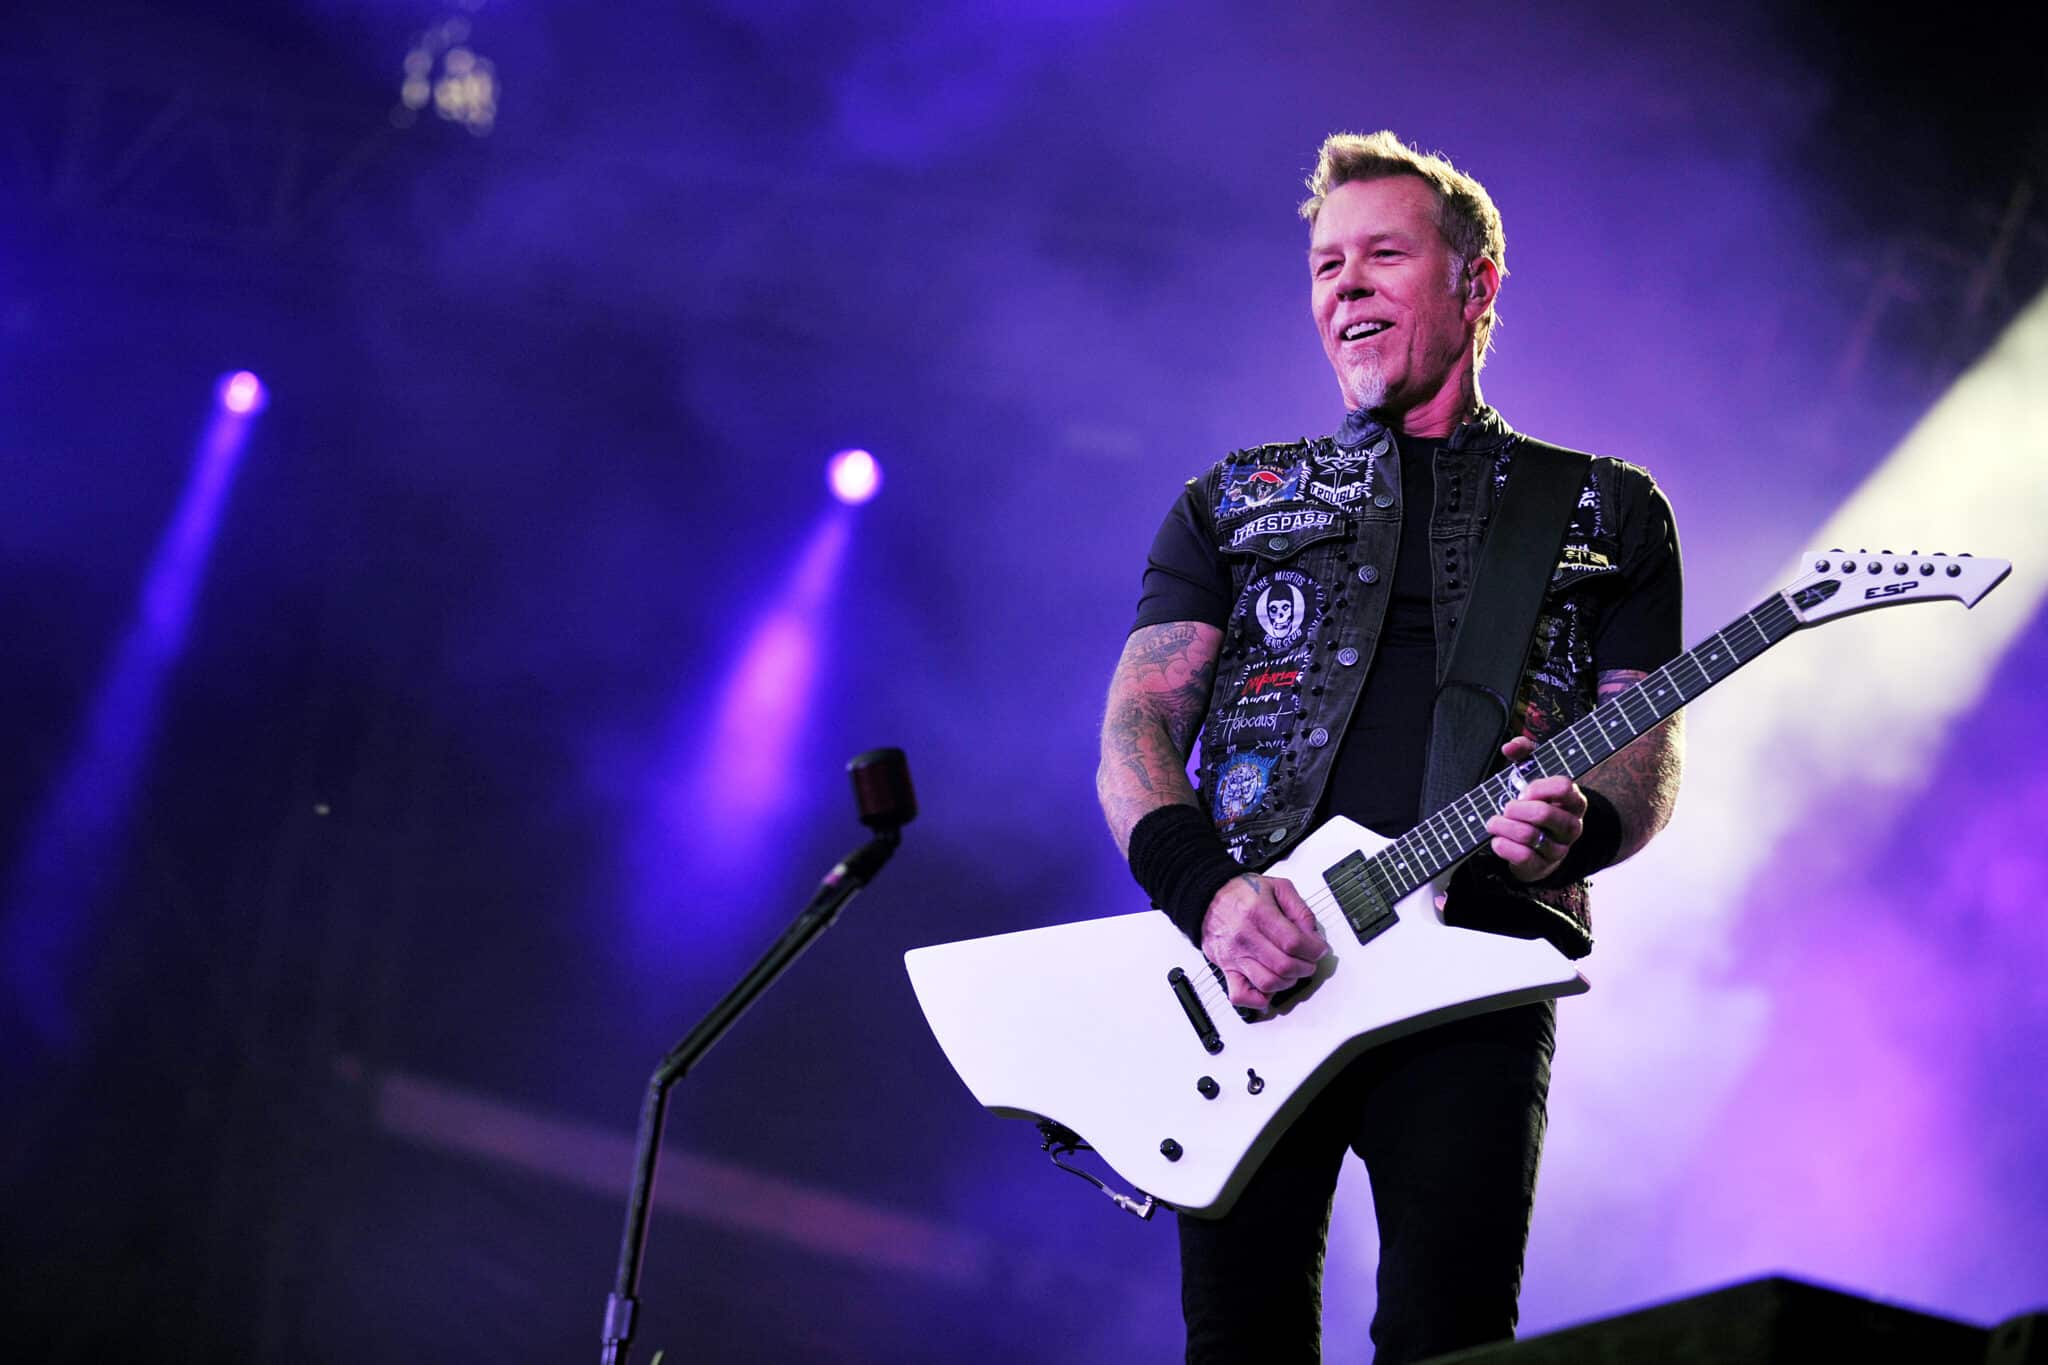 Prague May 7: Singer And Guitarist James Hetfield Of